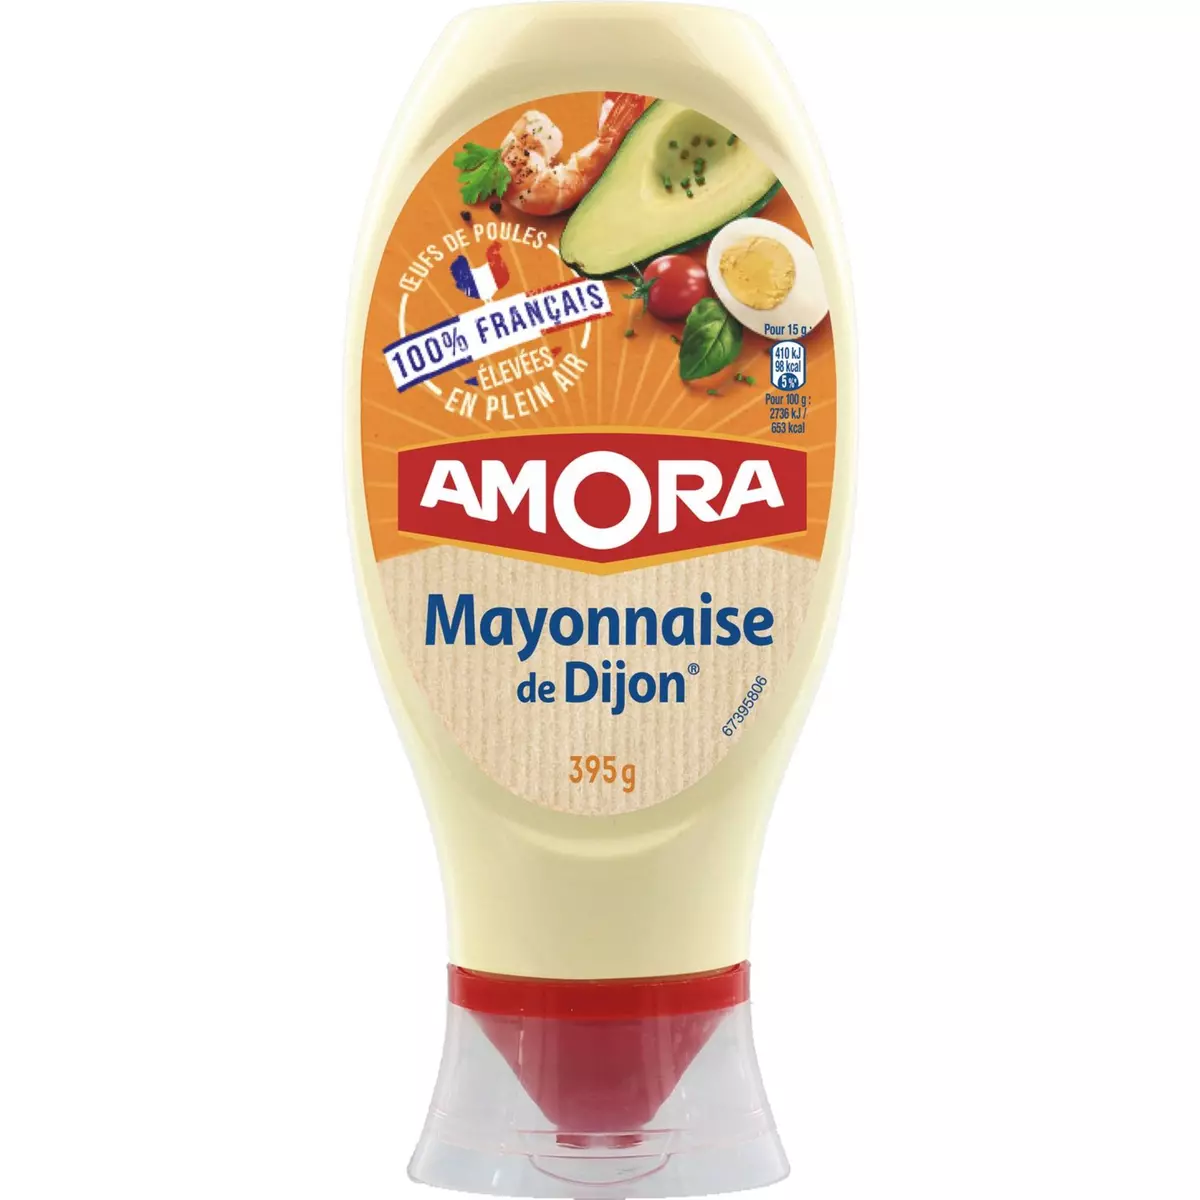 AMORA Mayonnaise de Dijon œufs de plein air 100% français en squeeze top down 685g